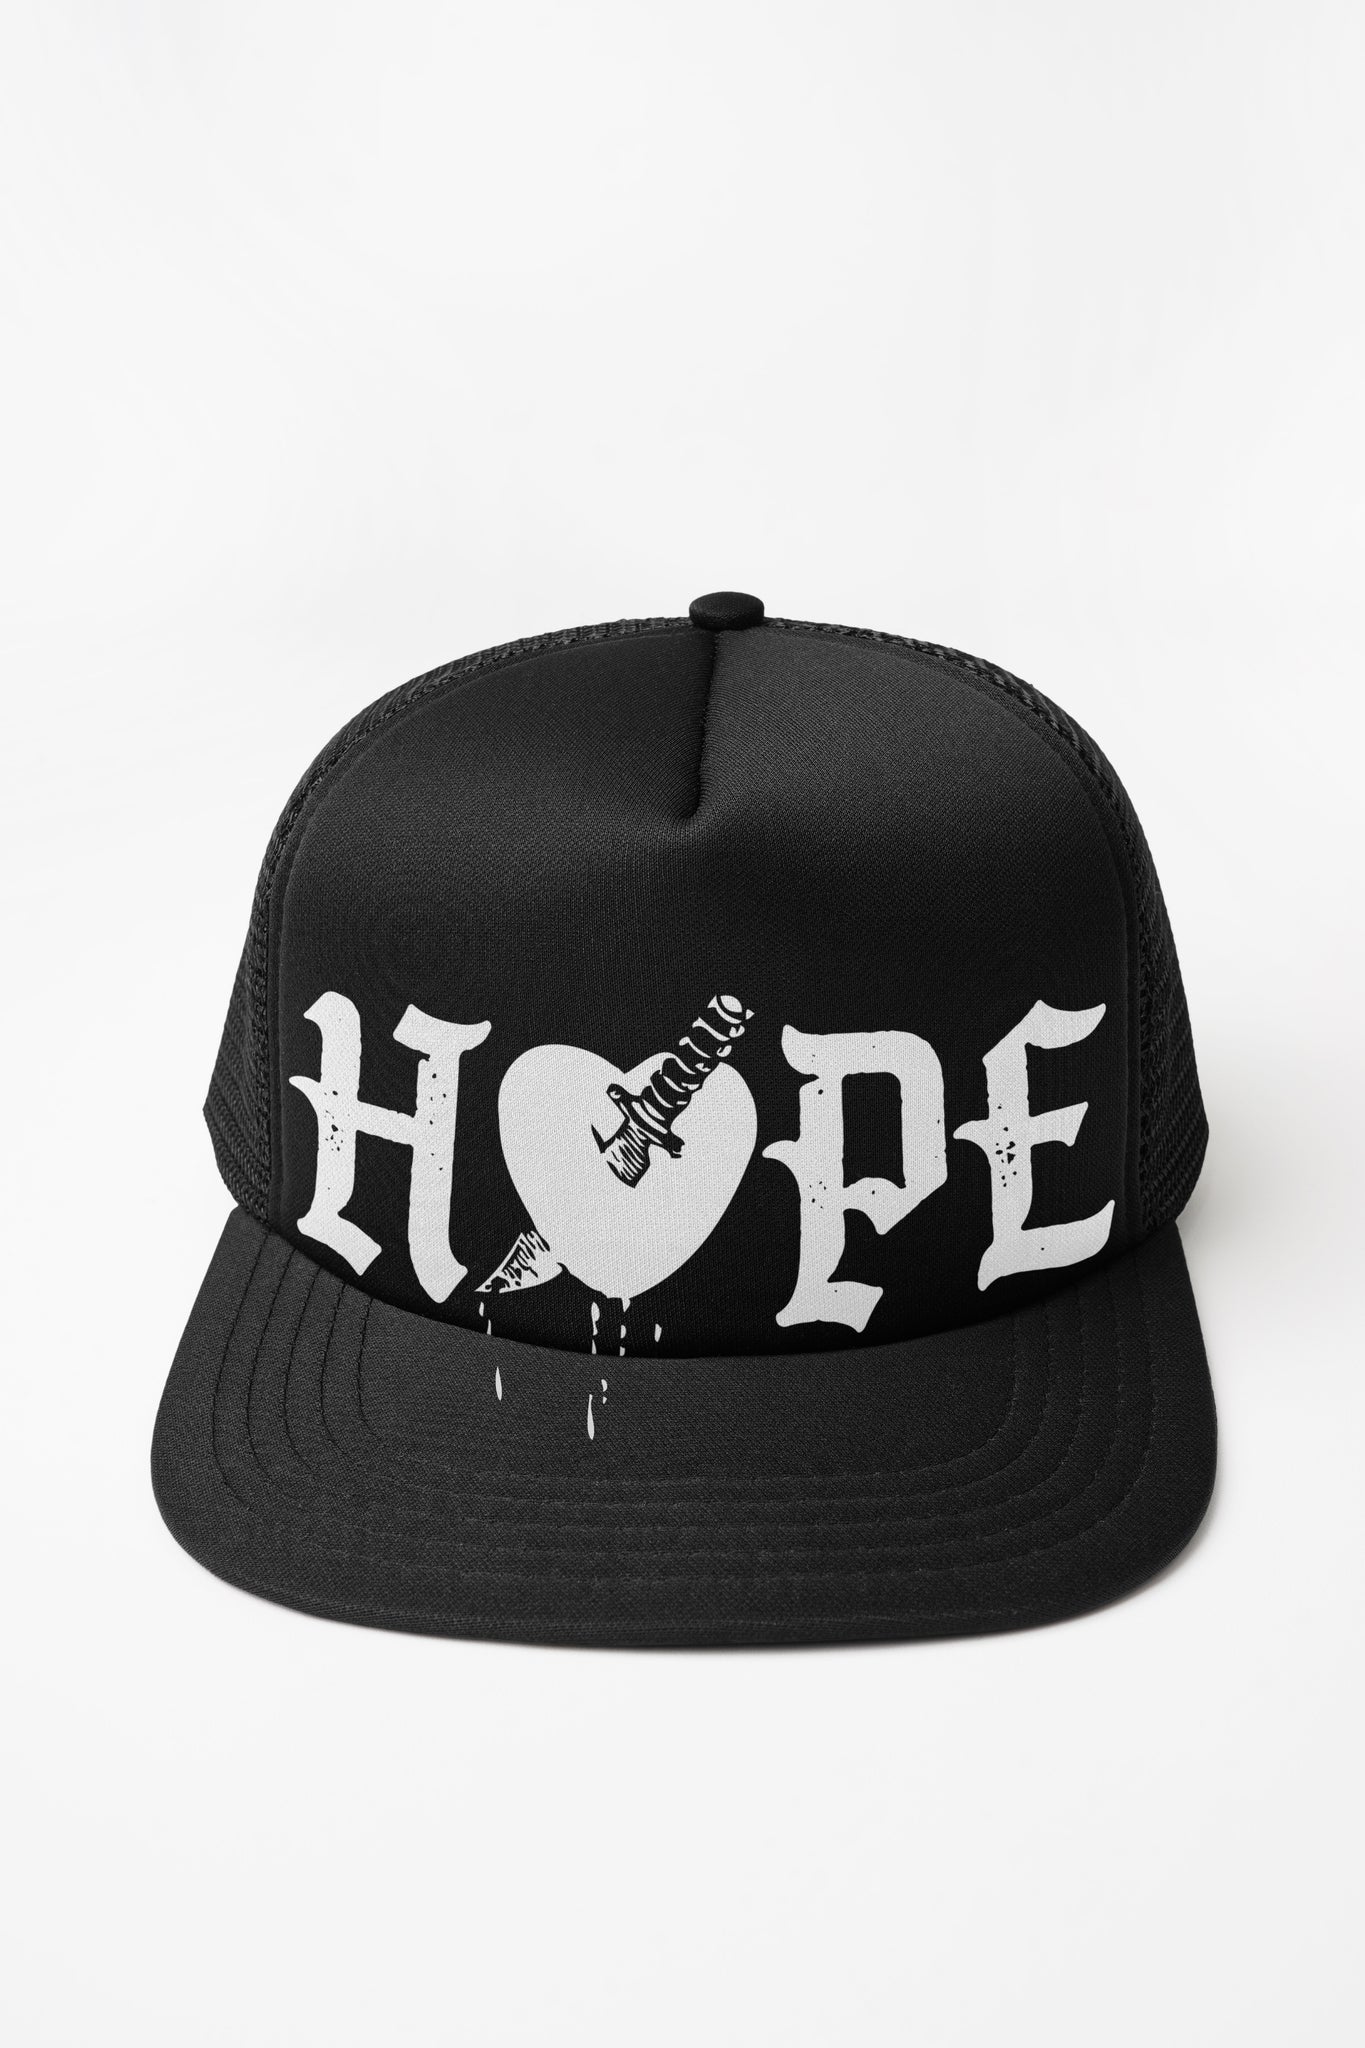 "HOPE" Trucker Hat